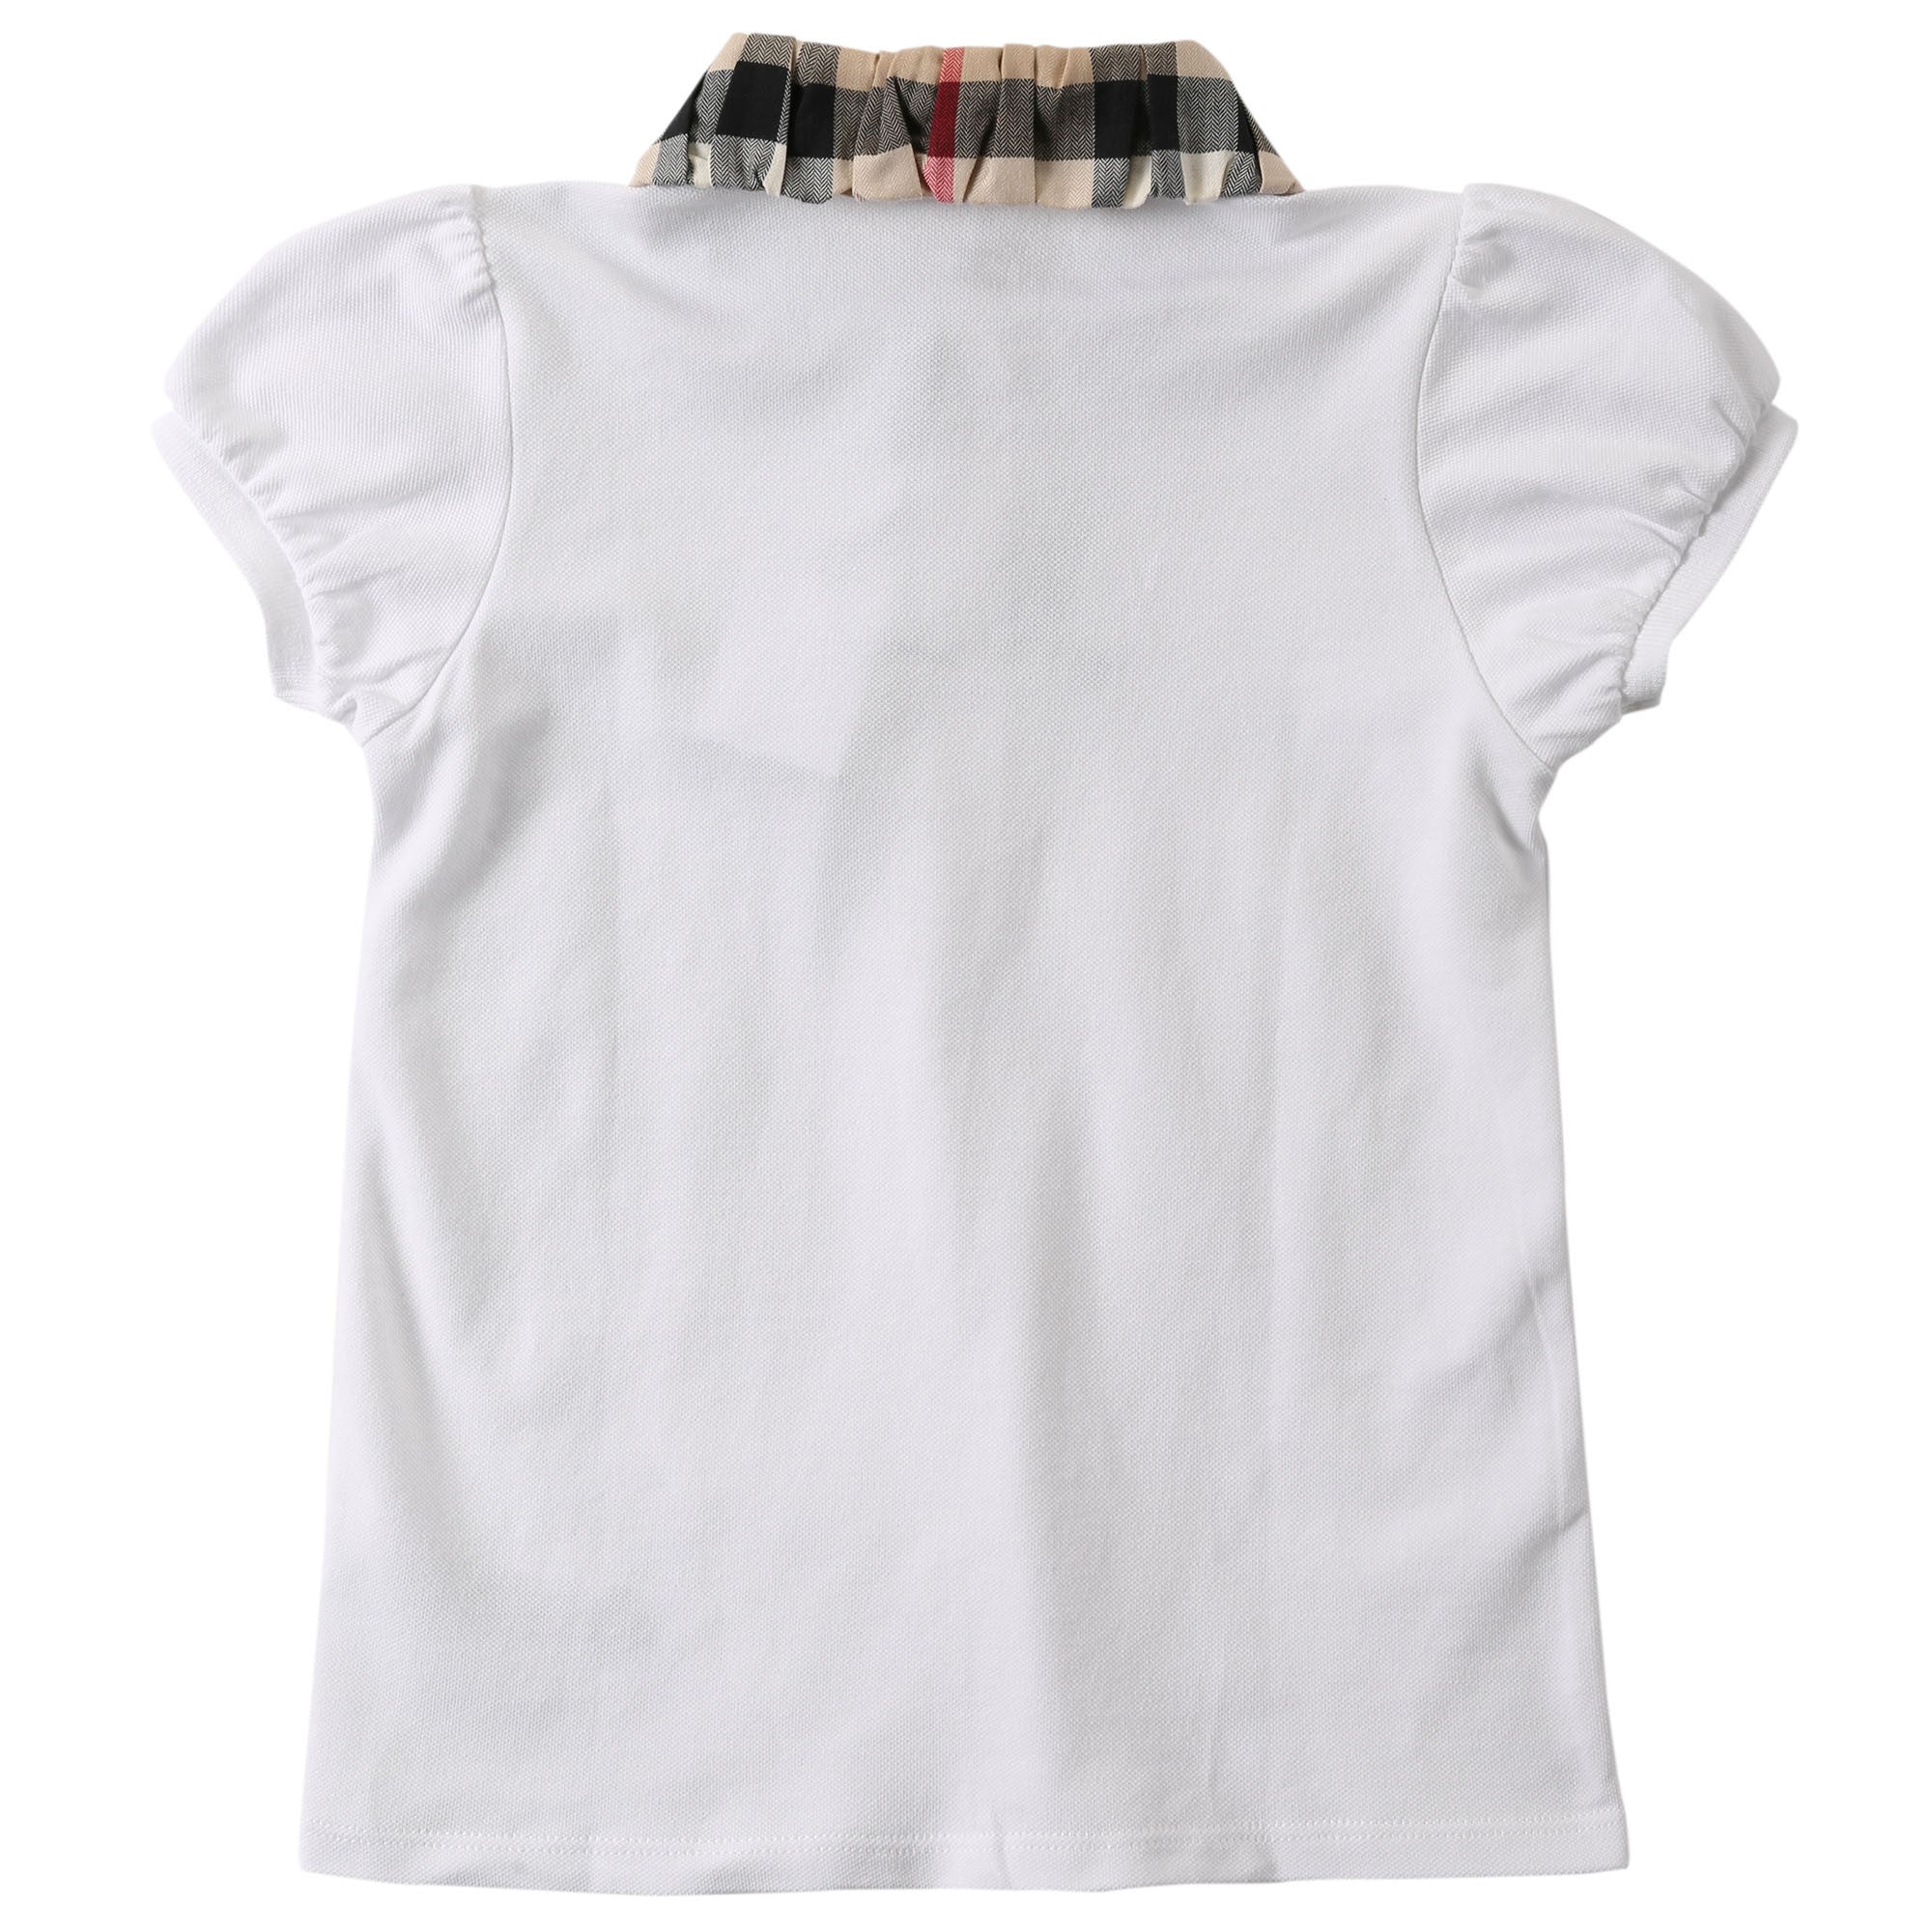 Girls White Cotton Polo Shirt With Beige Check Collar - CÉMAROSE | Children's Fashion Store - 2